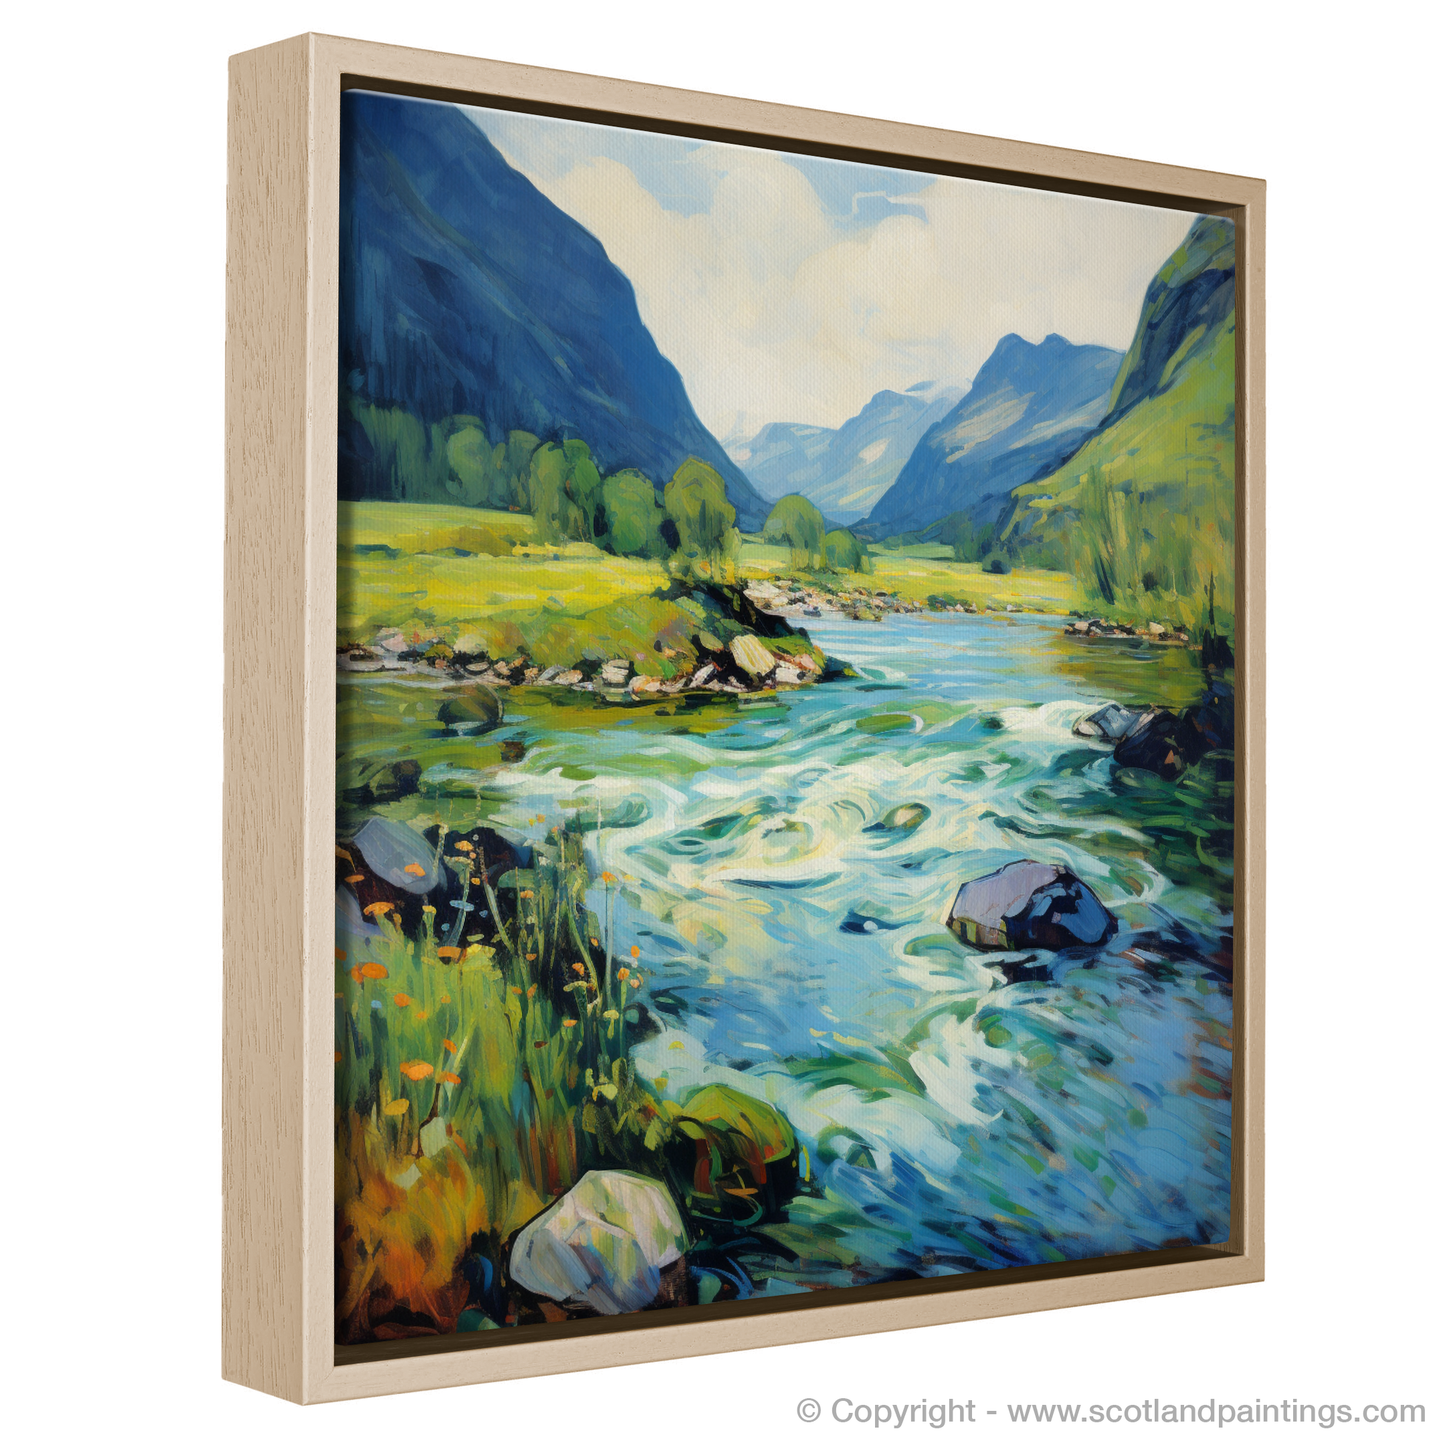 Painting and Art Print of River in Glencoe during summer entitled "Summer Serenade at River Glencoe".